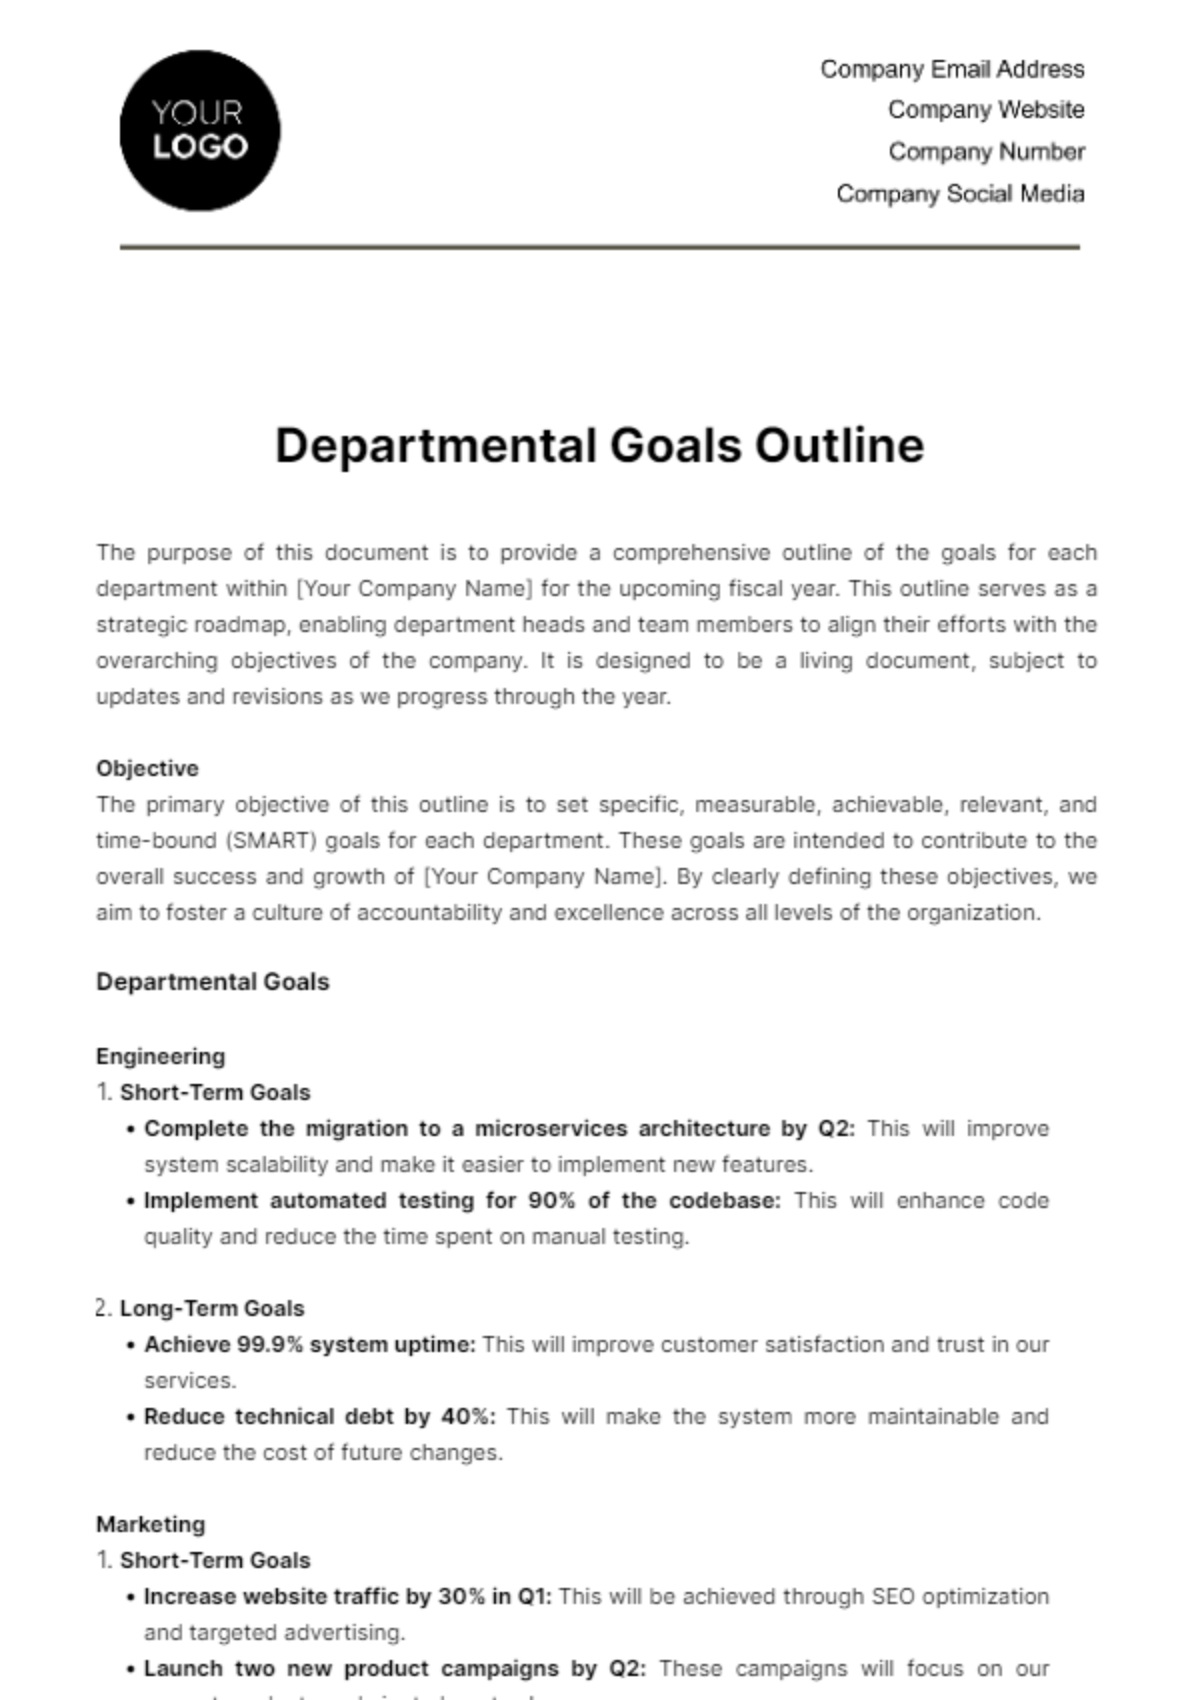 Departmental Goals Outline HR Template